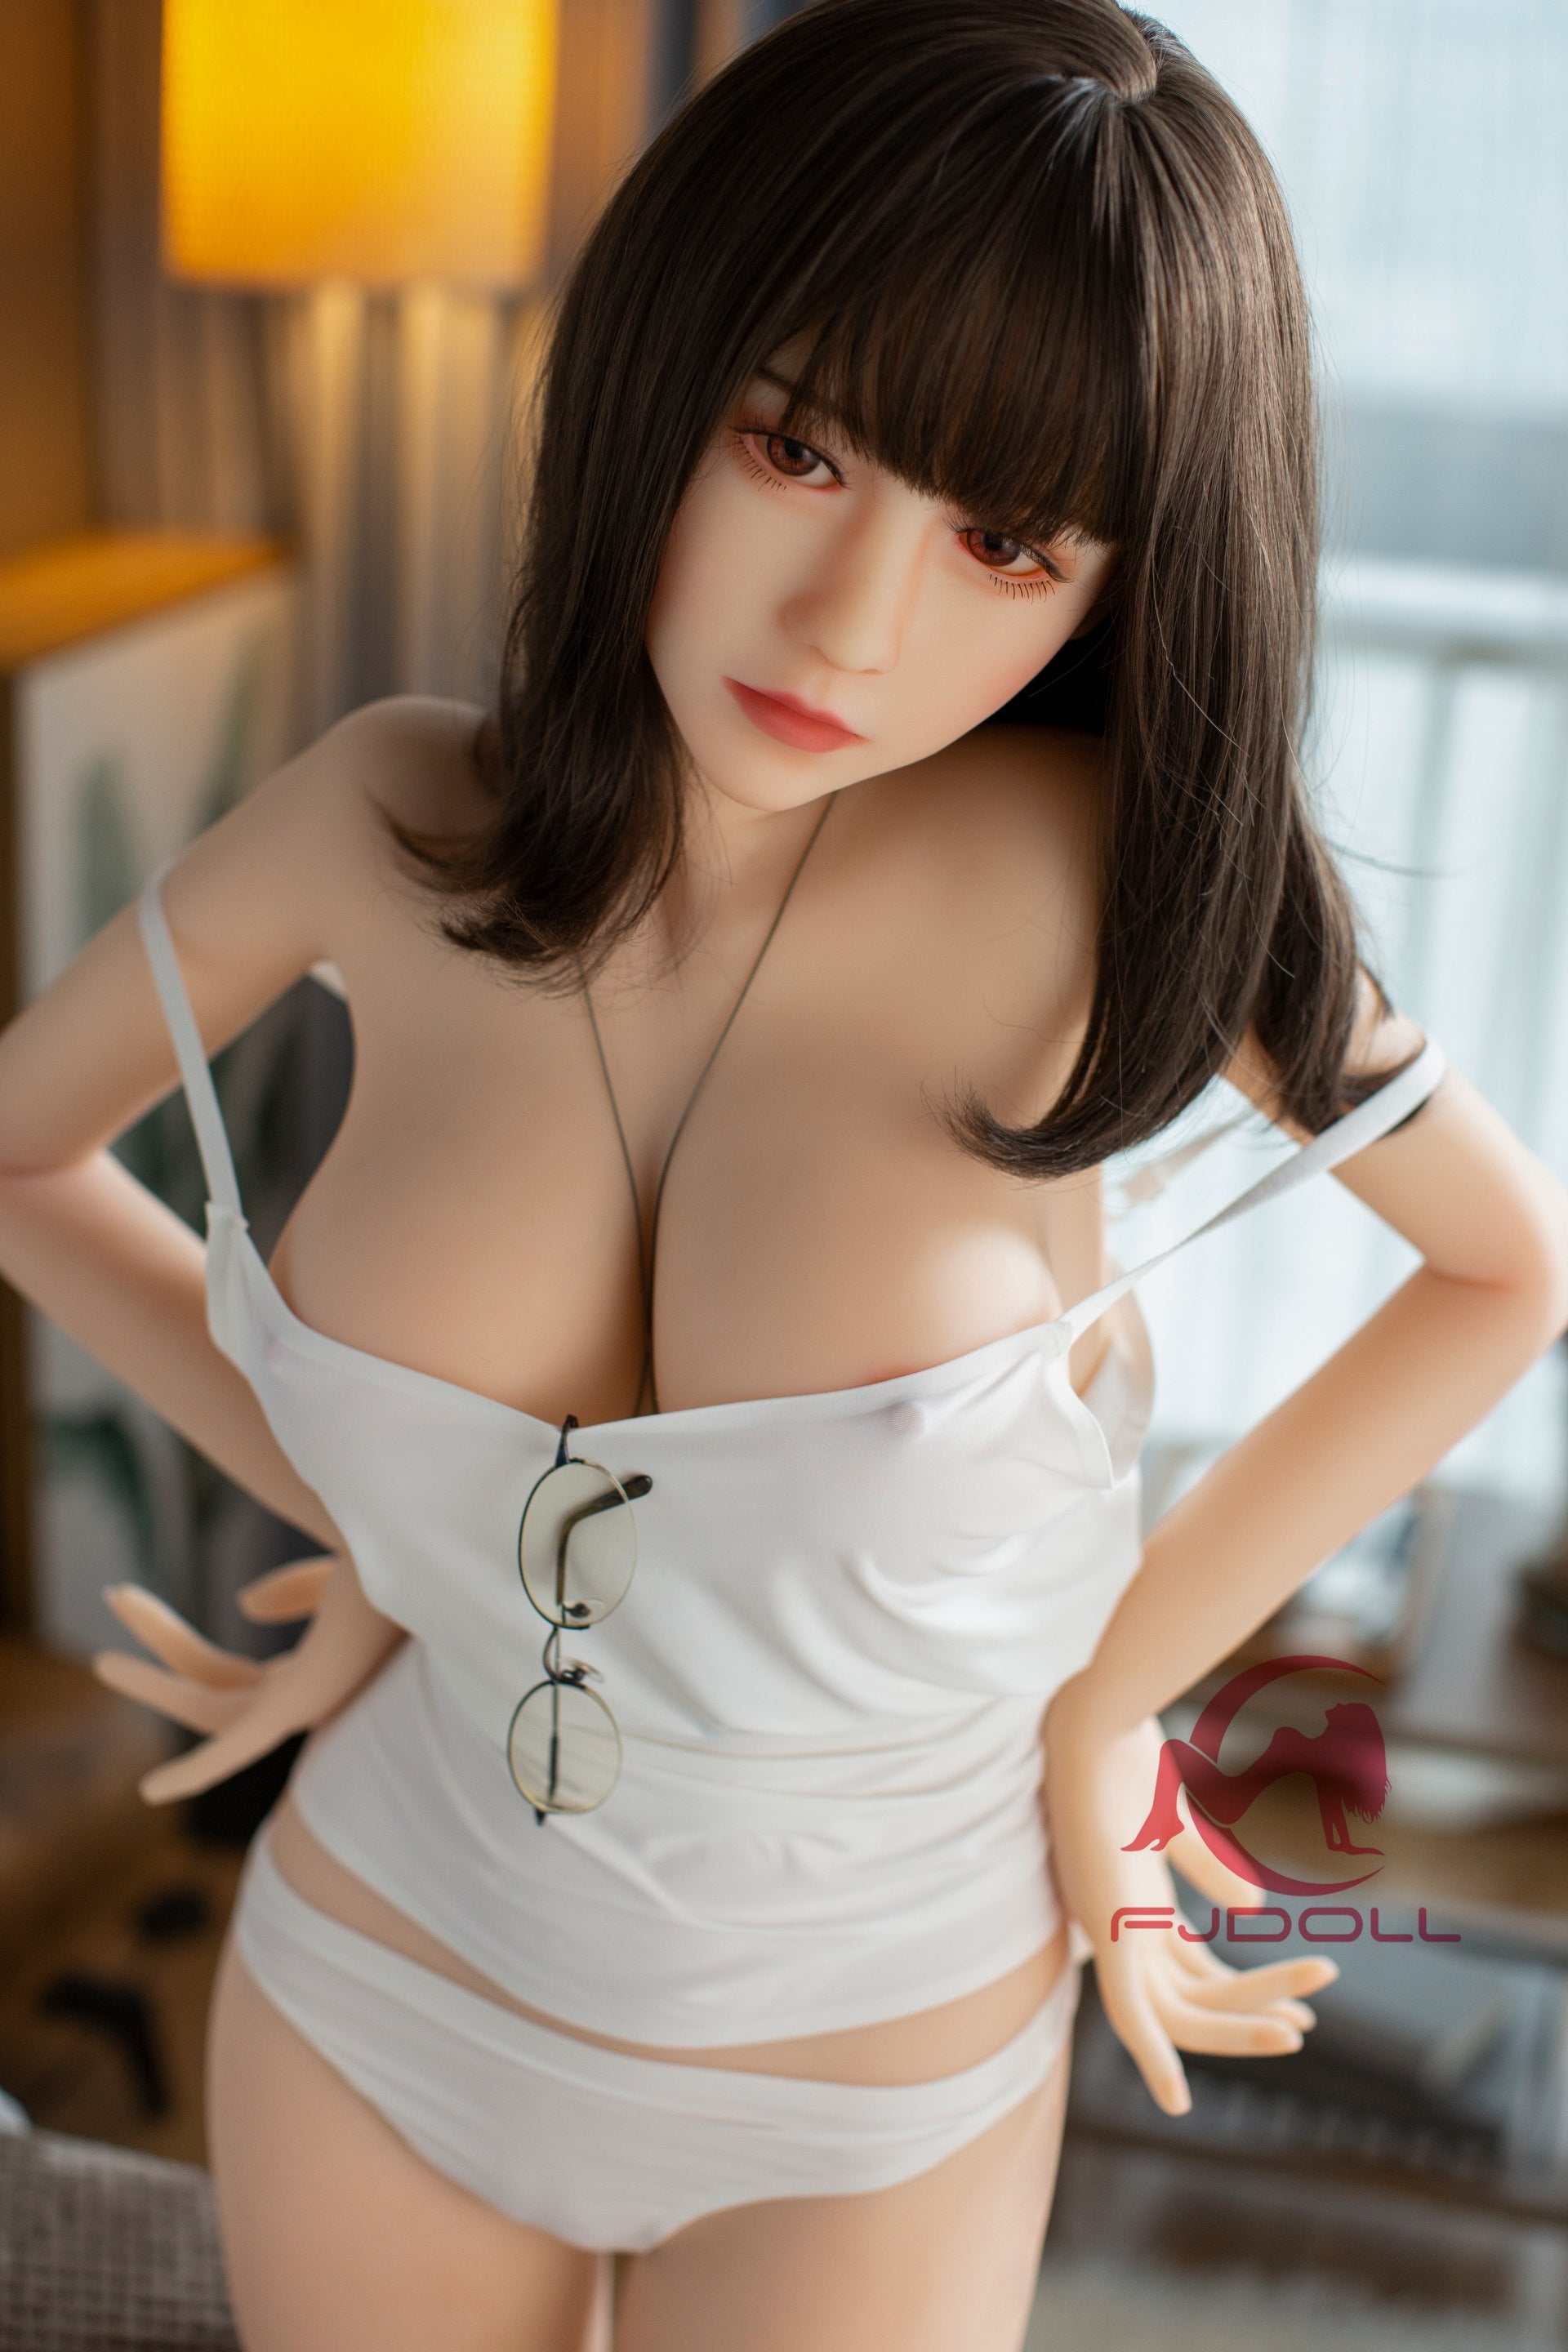 Jenny: FJ Doll Asian Sex Doll